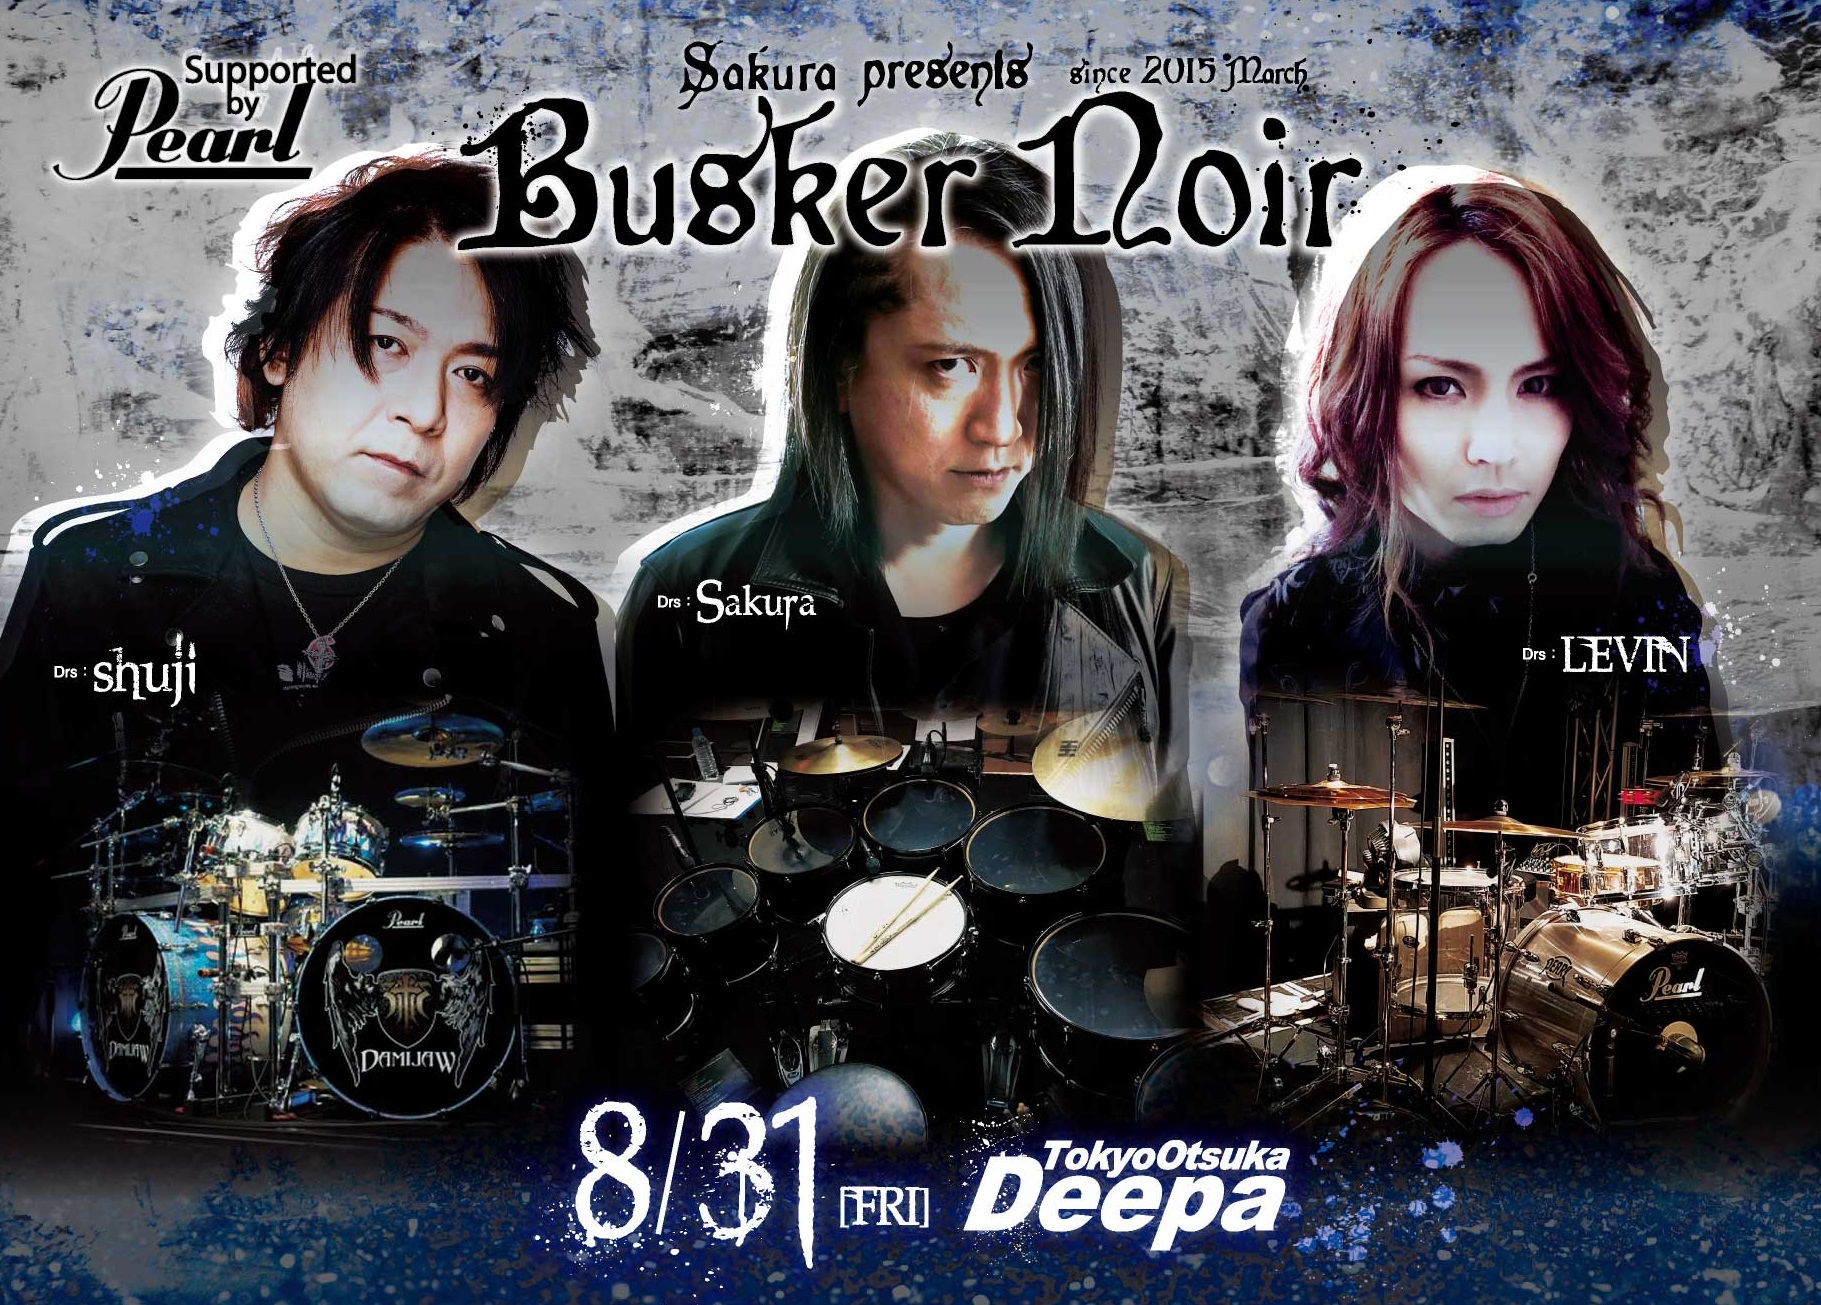 Sakura、LEVIN、shujiの三人のドラマーによるイベント『Busker Noir』の待望の東京編が、8/31に大塚Deepaで開催決定！